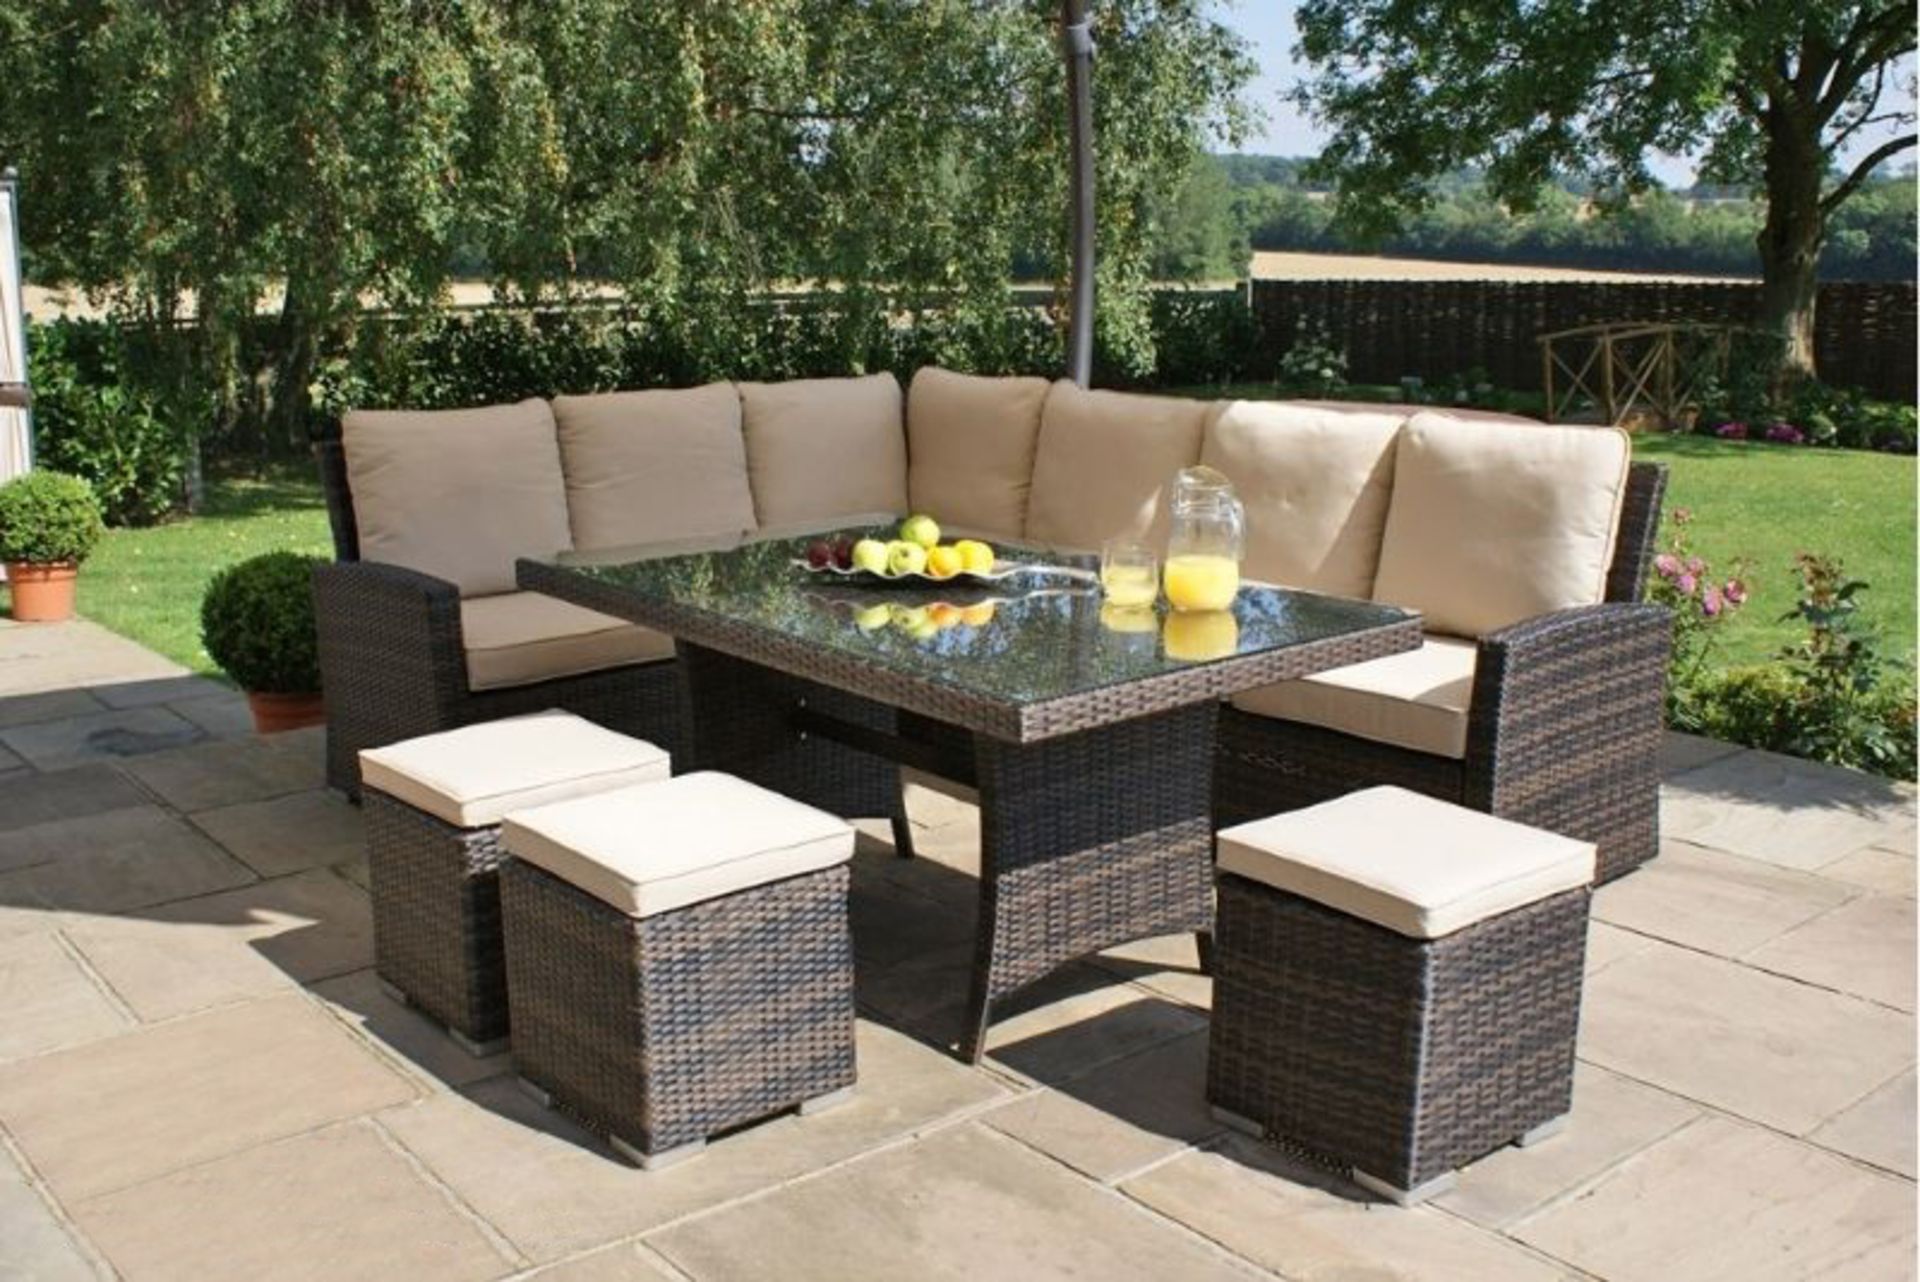 + VAT Brand New Chelsea Garden Company 8-Seater Light Brown Rattan Luxury Corner Outdoor Dining Set